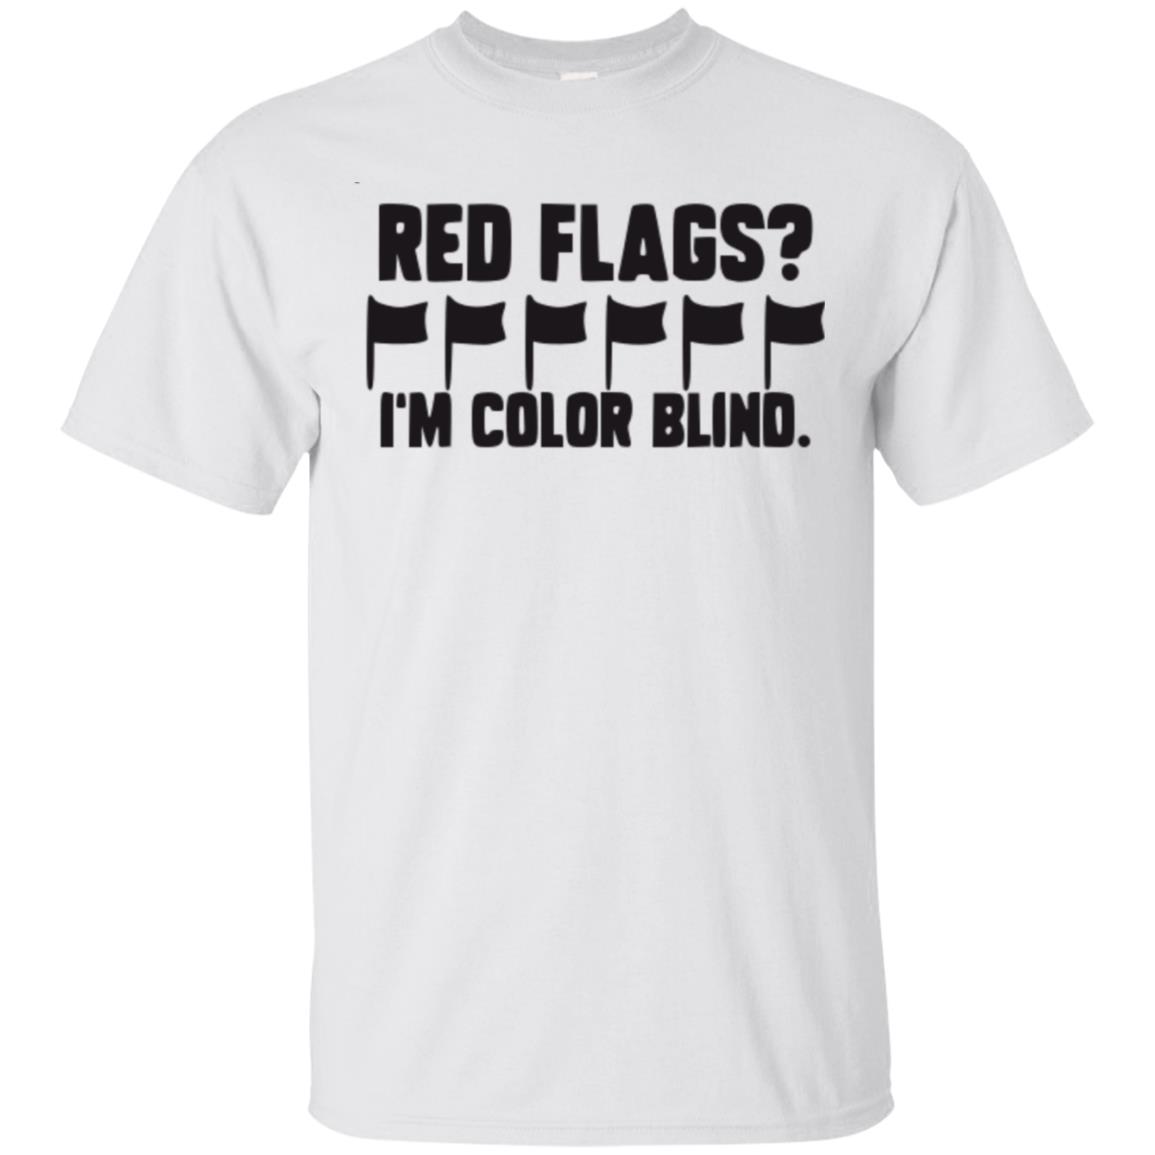 red flag shirt